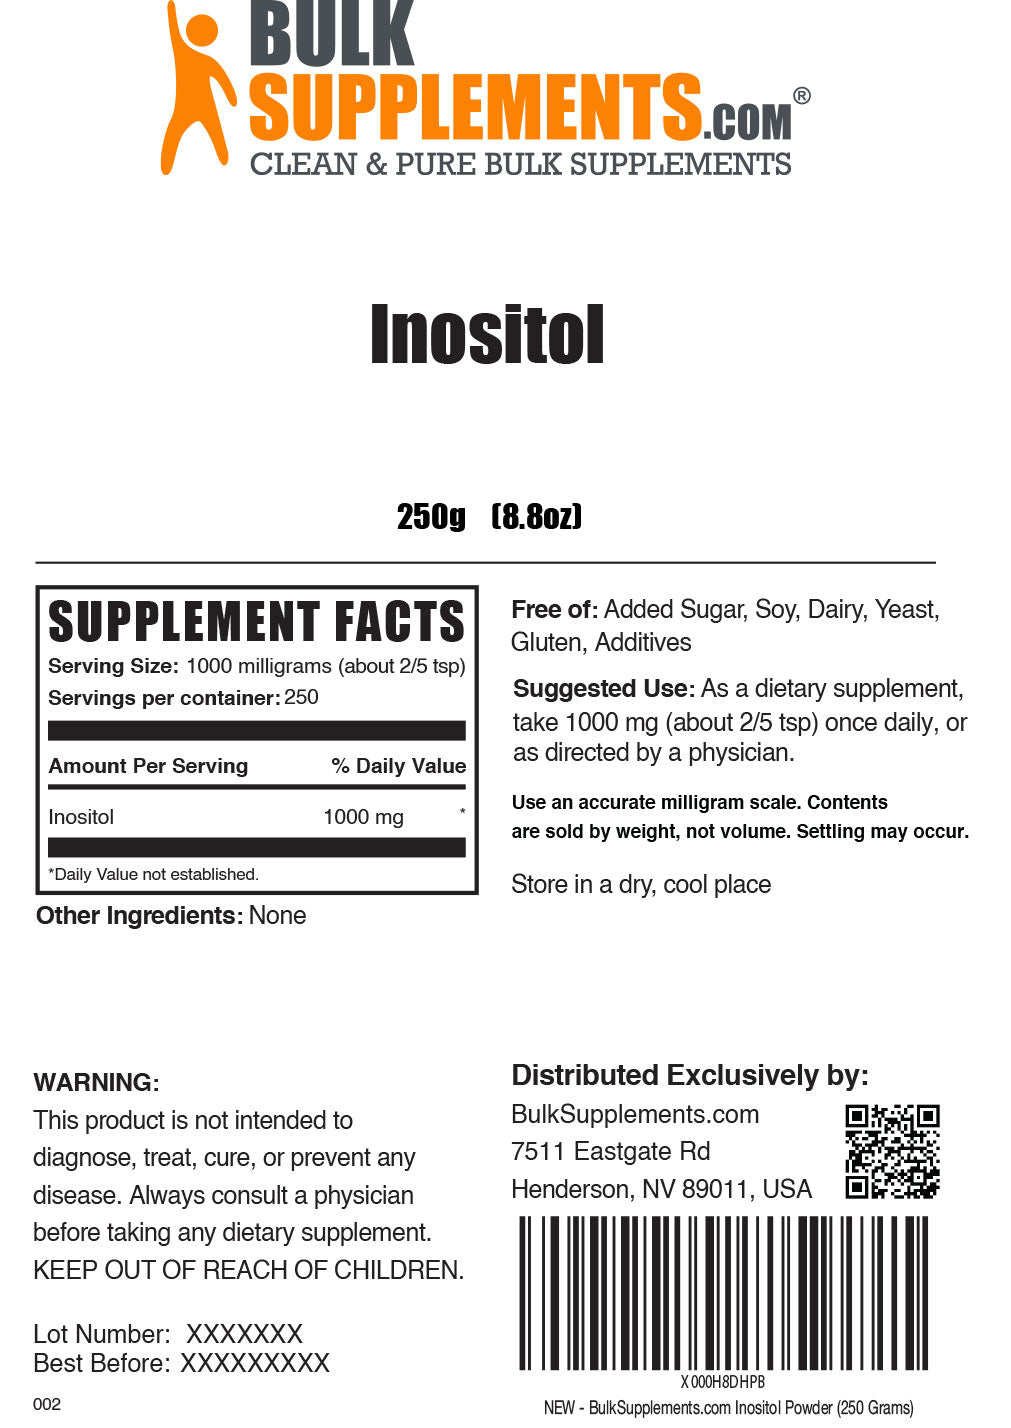 Inositol Powder Label 250g